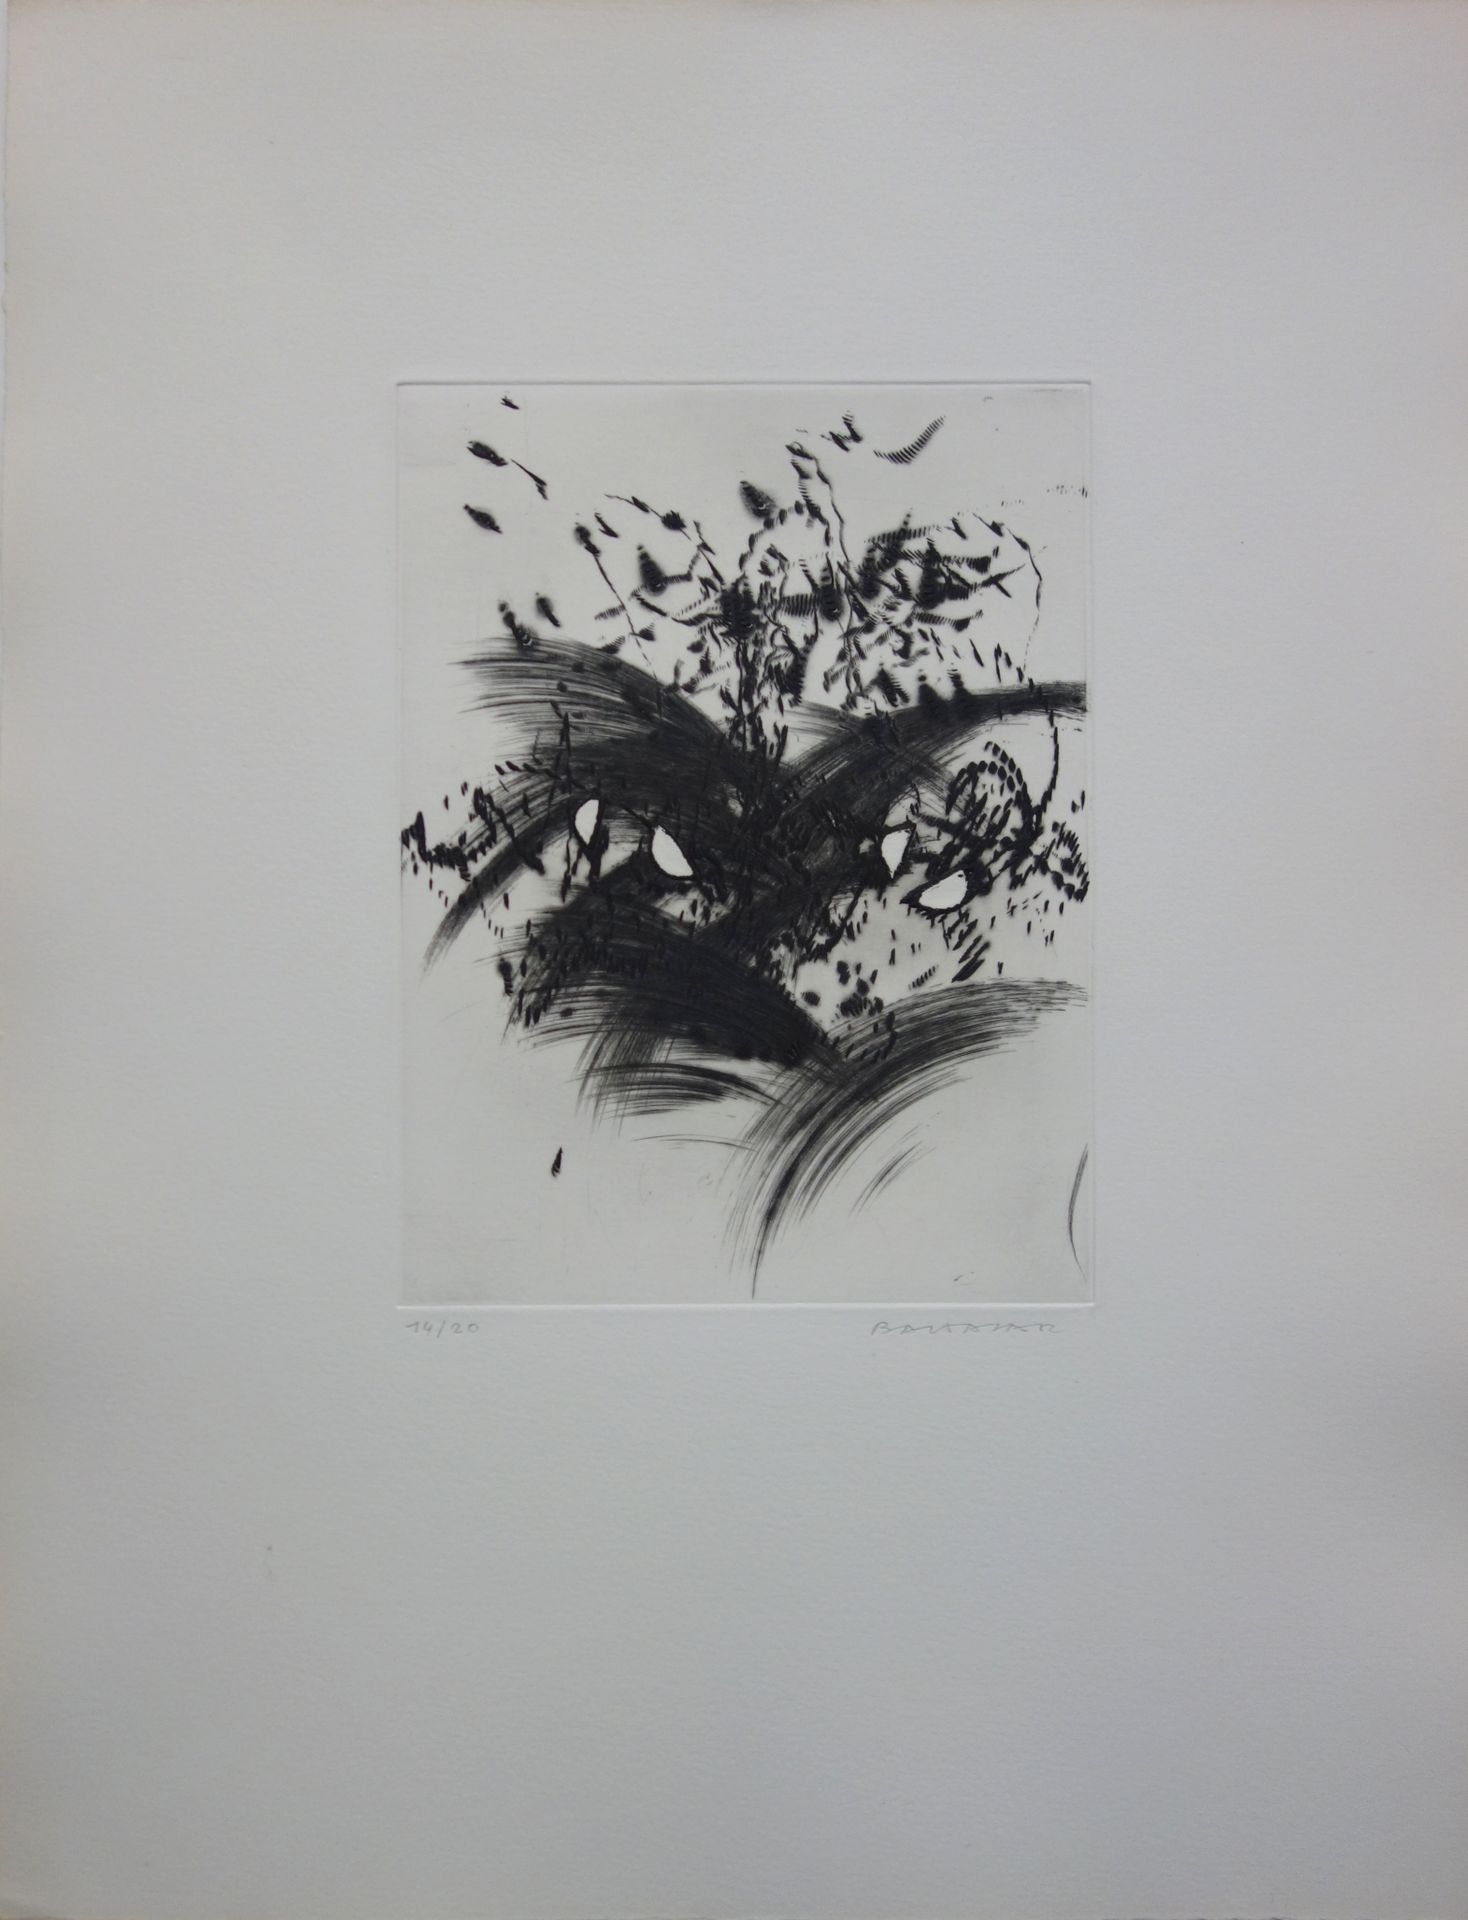 Julius BALTAZAR 朱利叶斯-巴尔塔扎尔 (1949 -)

内部喜悦

牛皮纸上的原始蚀刻画

41 x 31厘米

以铅笔签名，并在20号上标明&hellip;